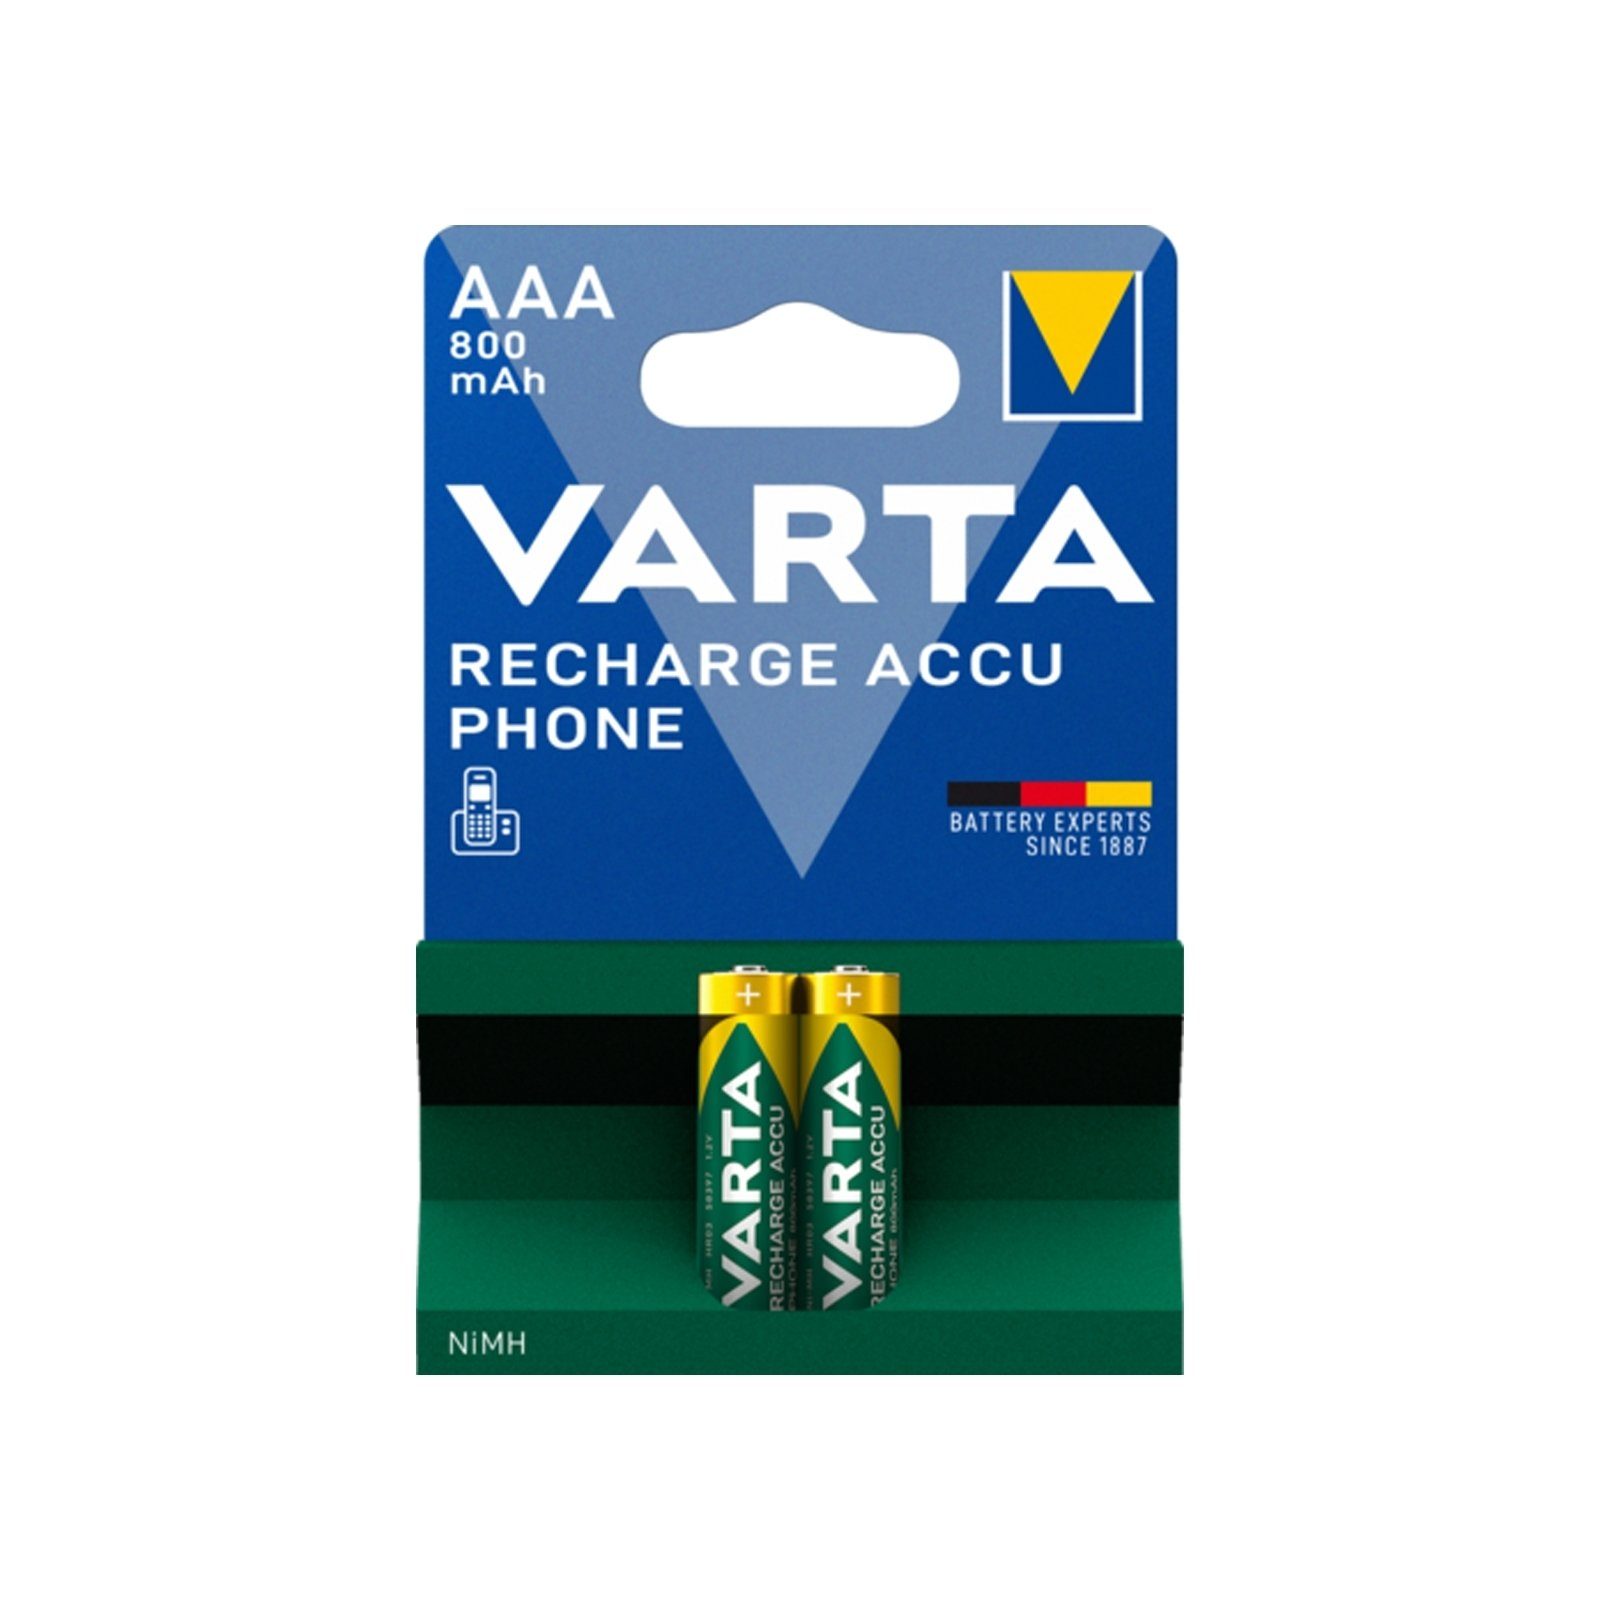 2xAAA mAh Accu Recharge VARTA Batterie Phone 800